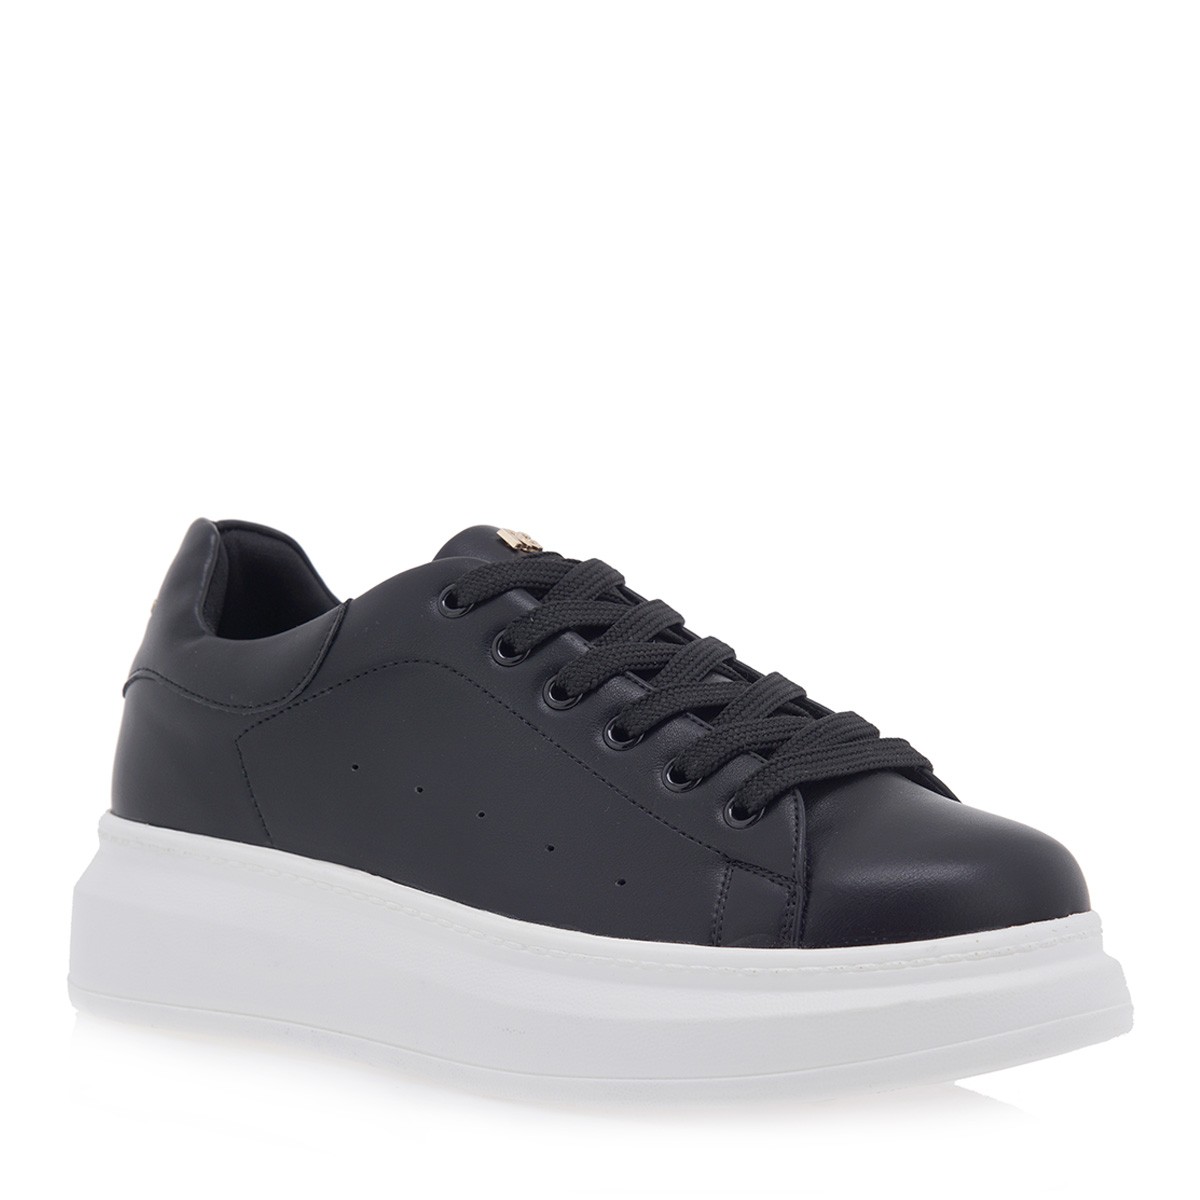 Renato Garini Γυναικεία Παπούτσια Sneakers 101-19R Μαύρο Λευκό P119R1012105